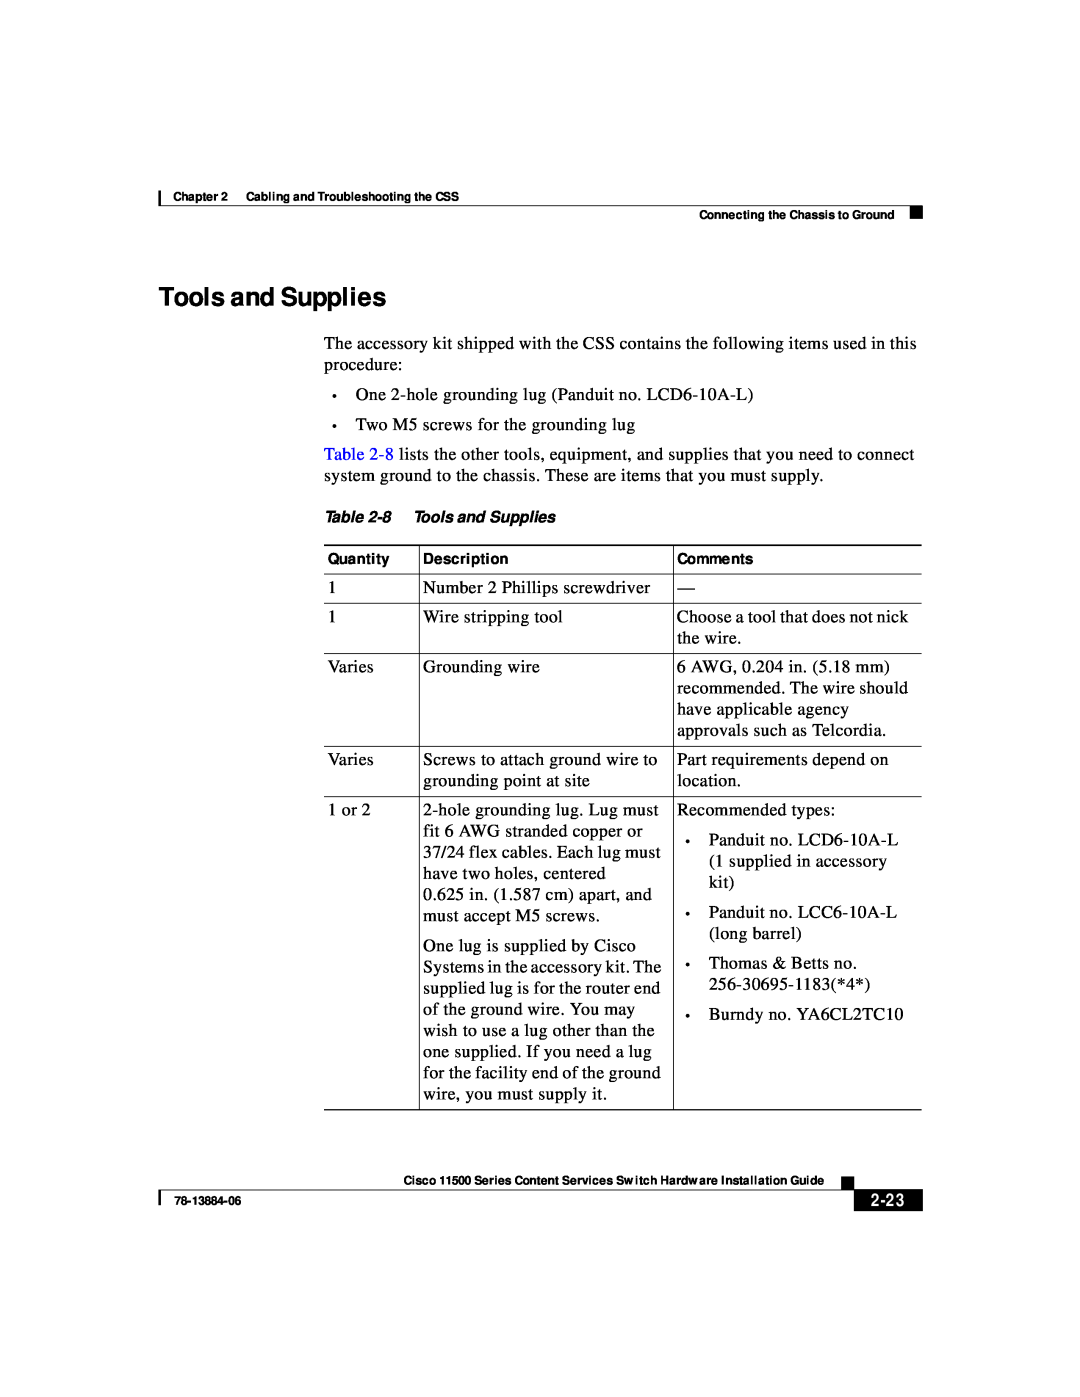 Cisco Systems 11500 Series manual Tools and Supplies, Quantity, Description, Comments, 2-23 